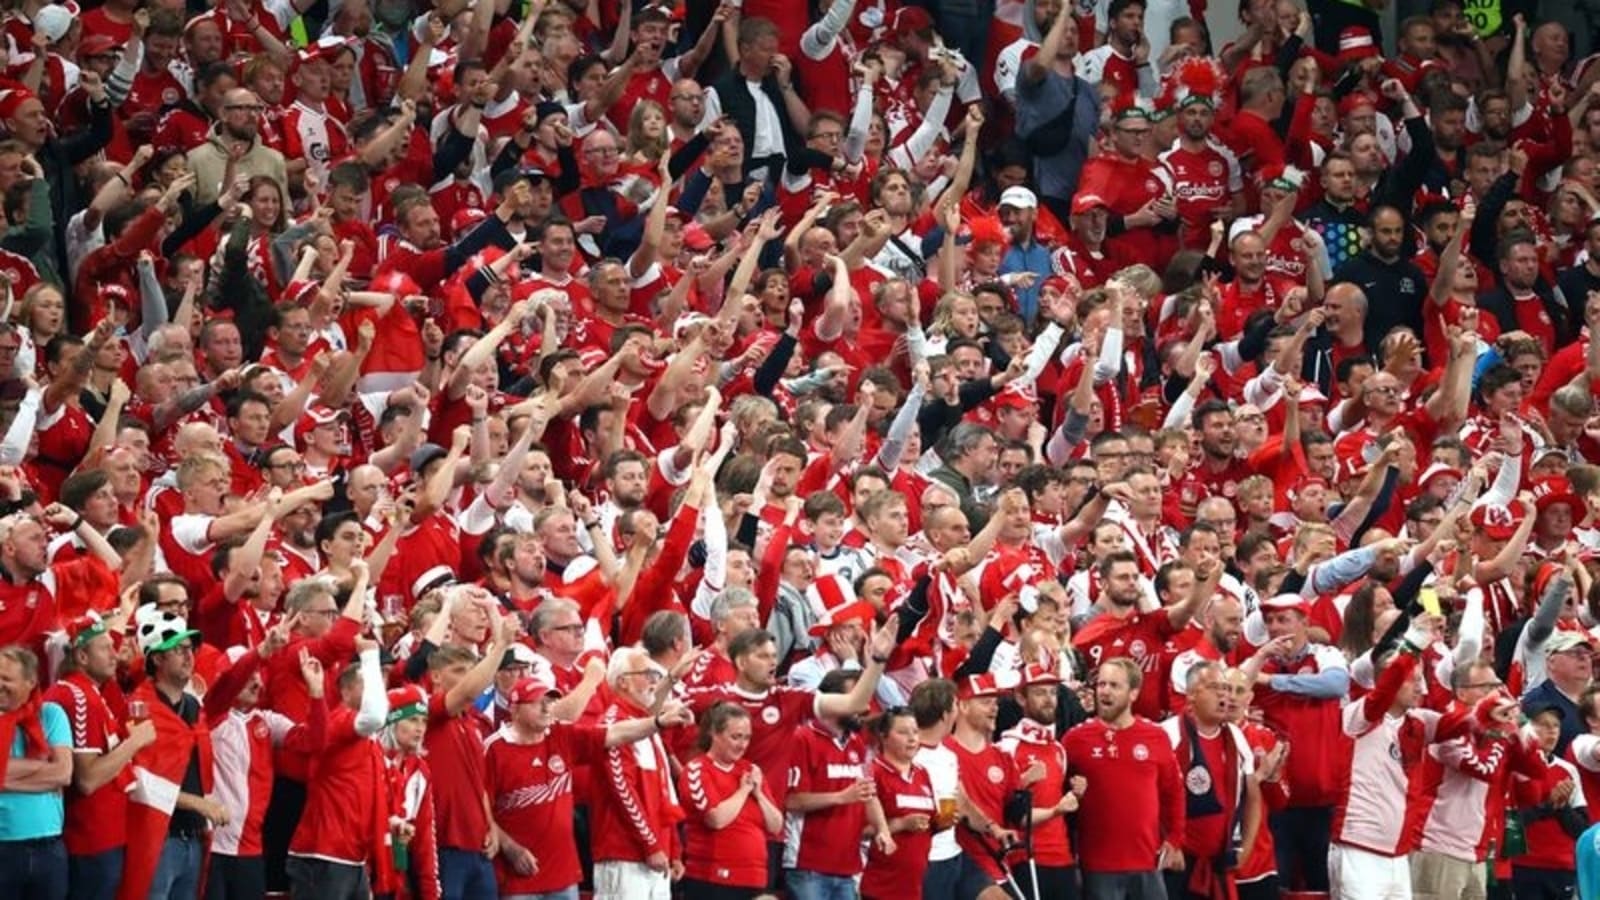 Twelve hours Amsterdam: Danish fans eye travel for Wales match | Football News - Hindustan